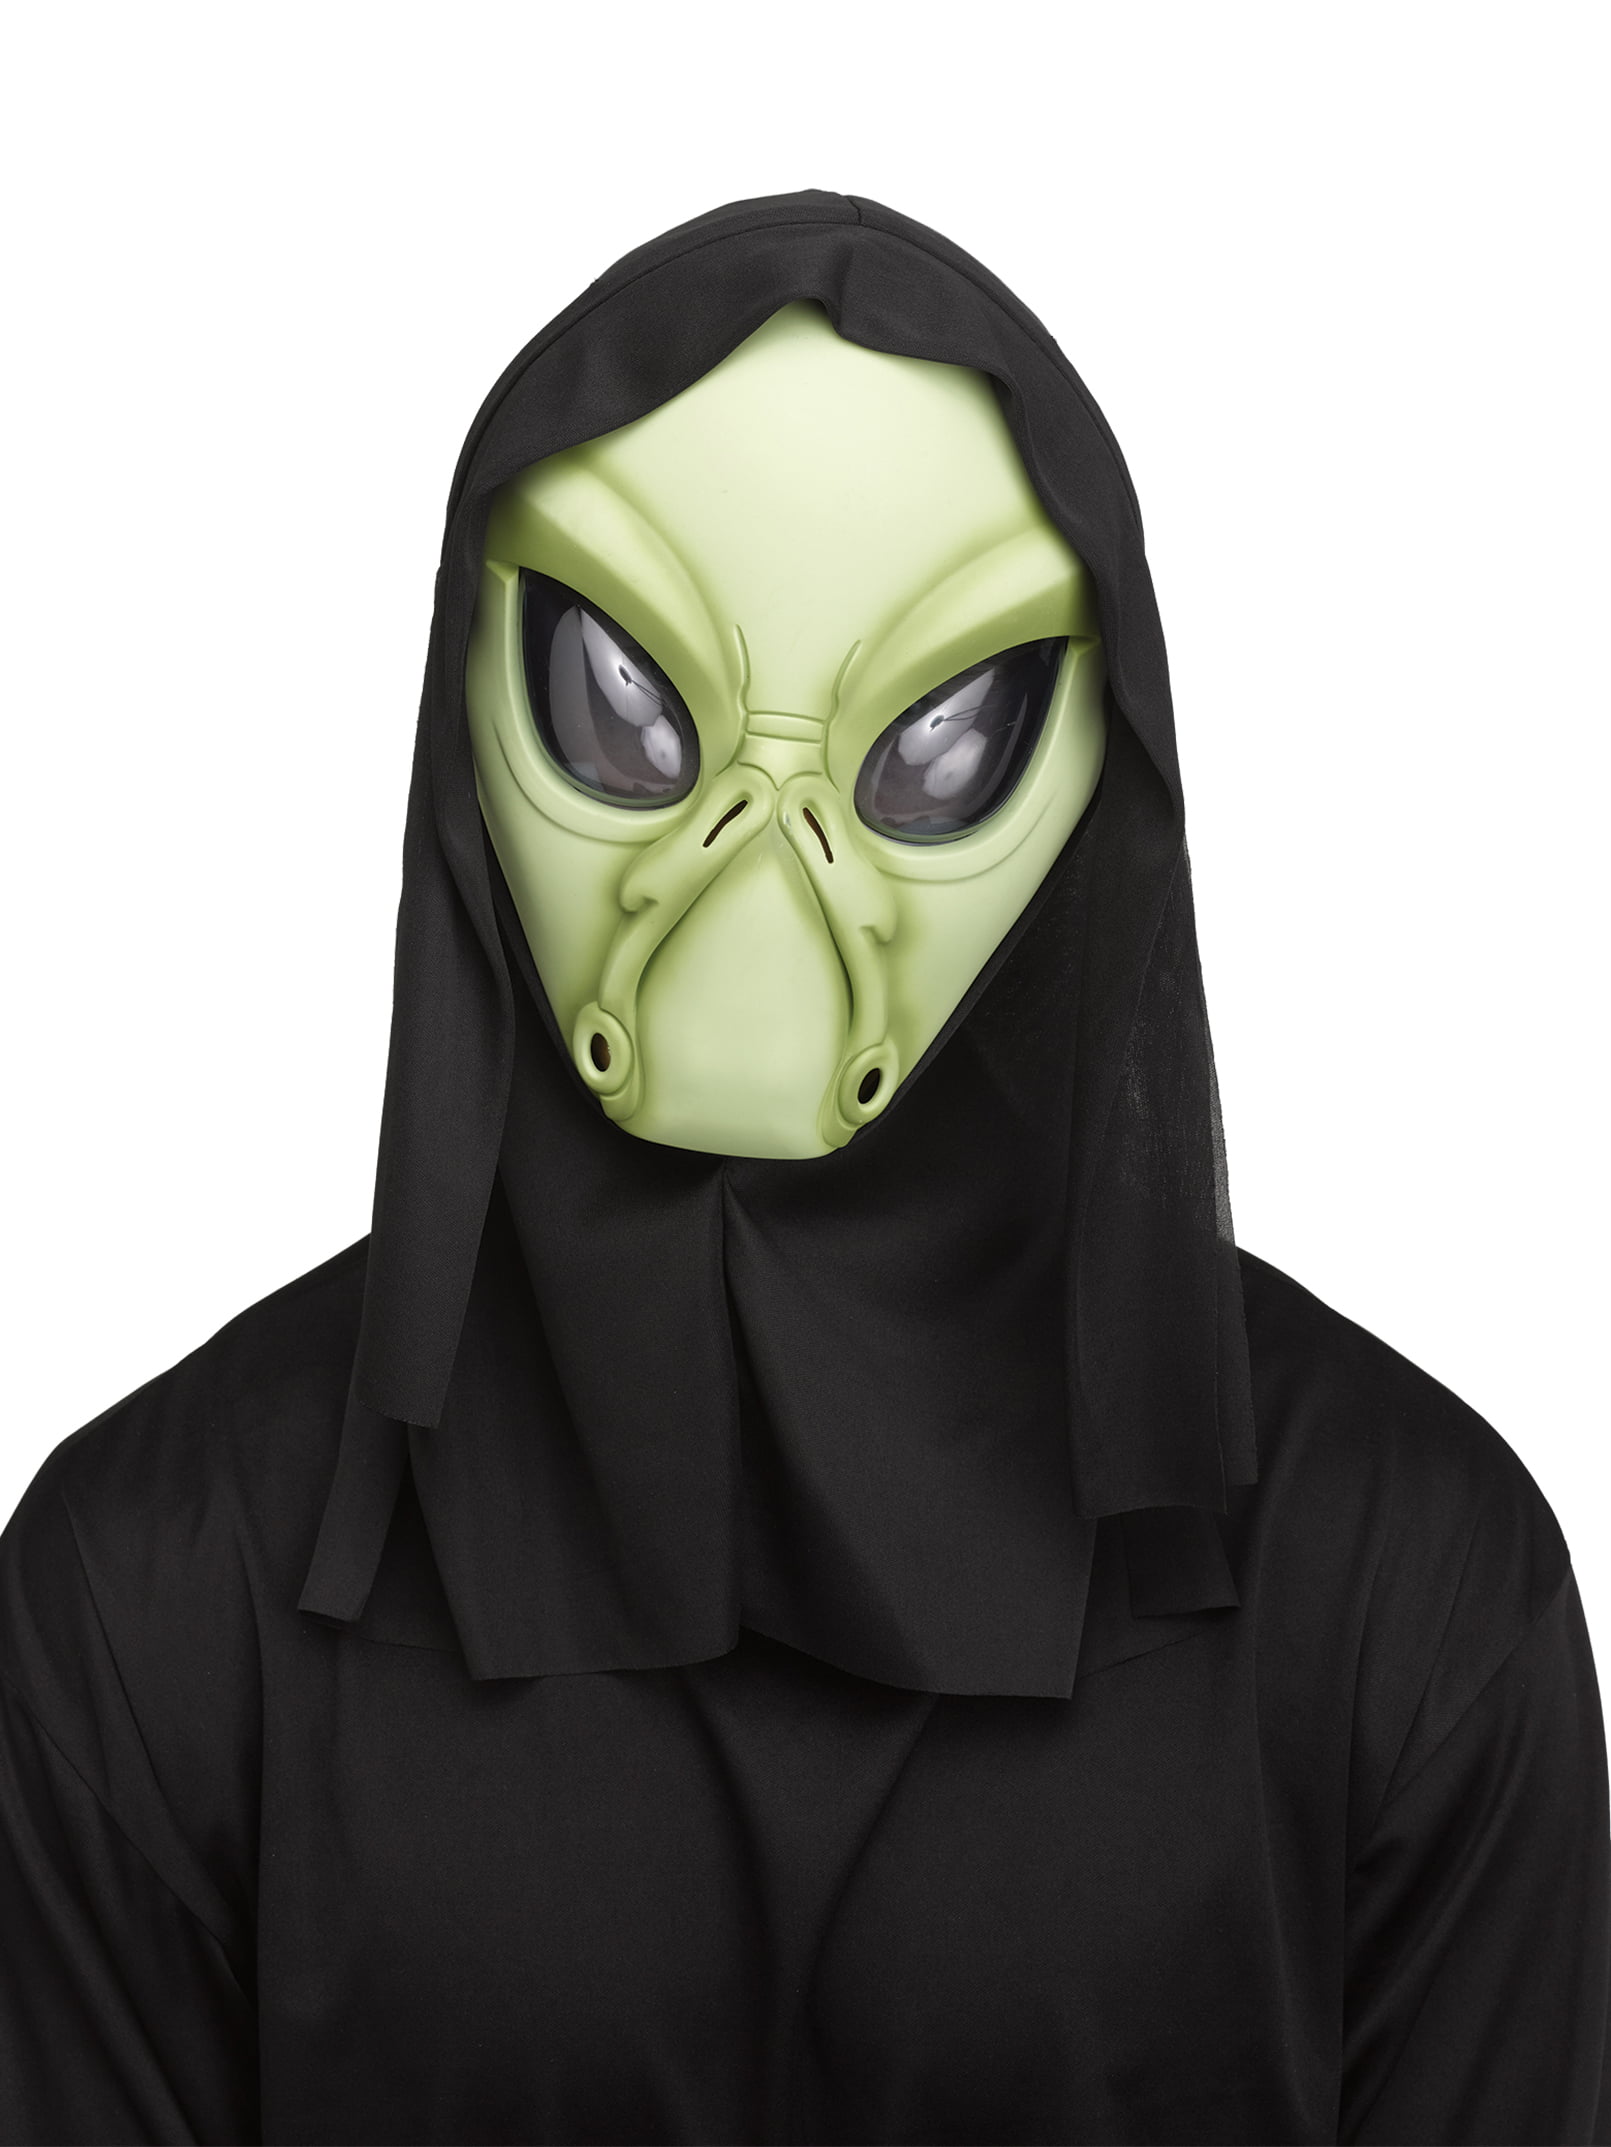 Alien Hard Face Halloween Black Shroud Hooded Costume Mask, One-Size, Green  